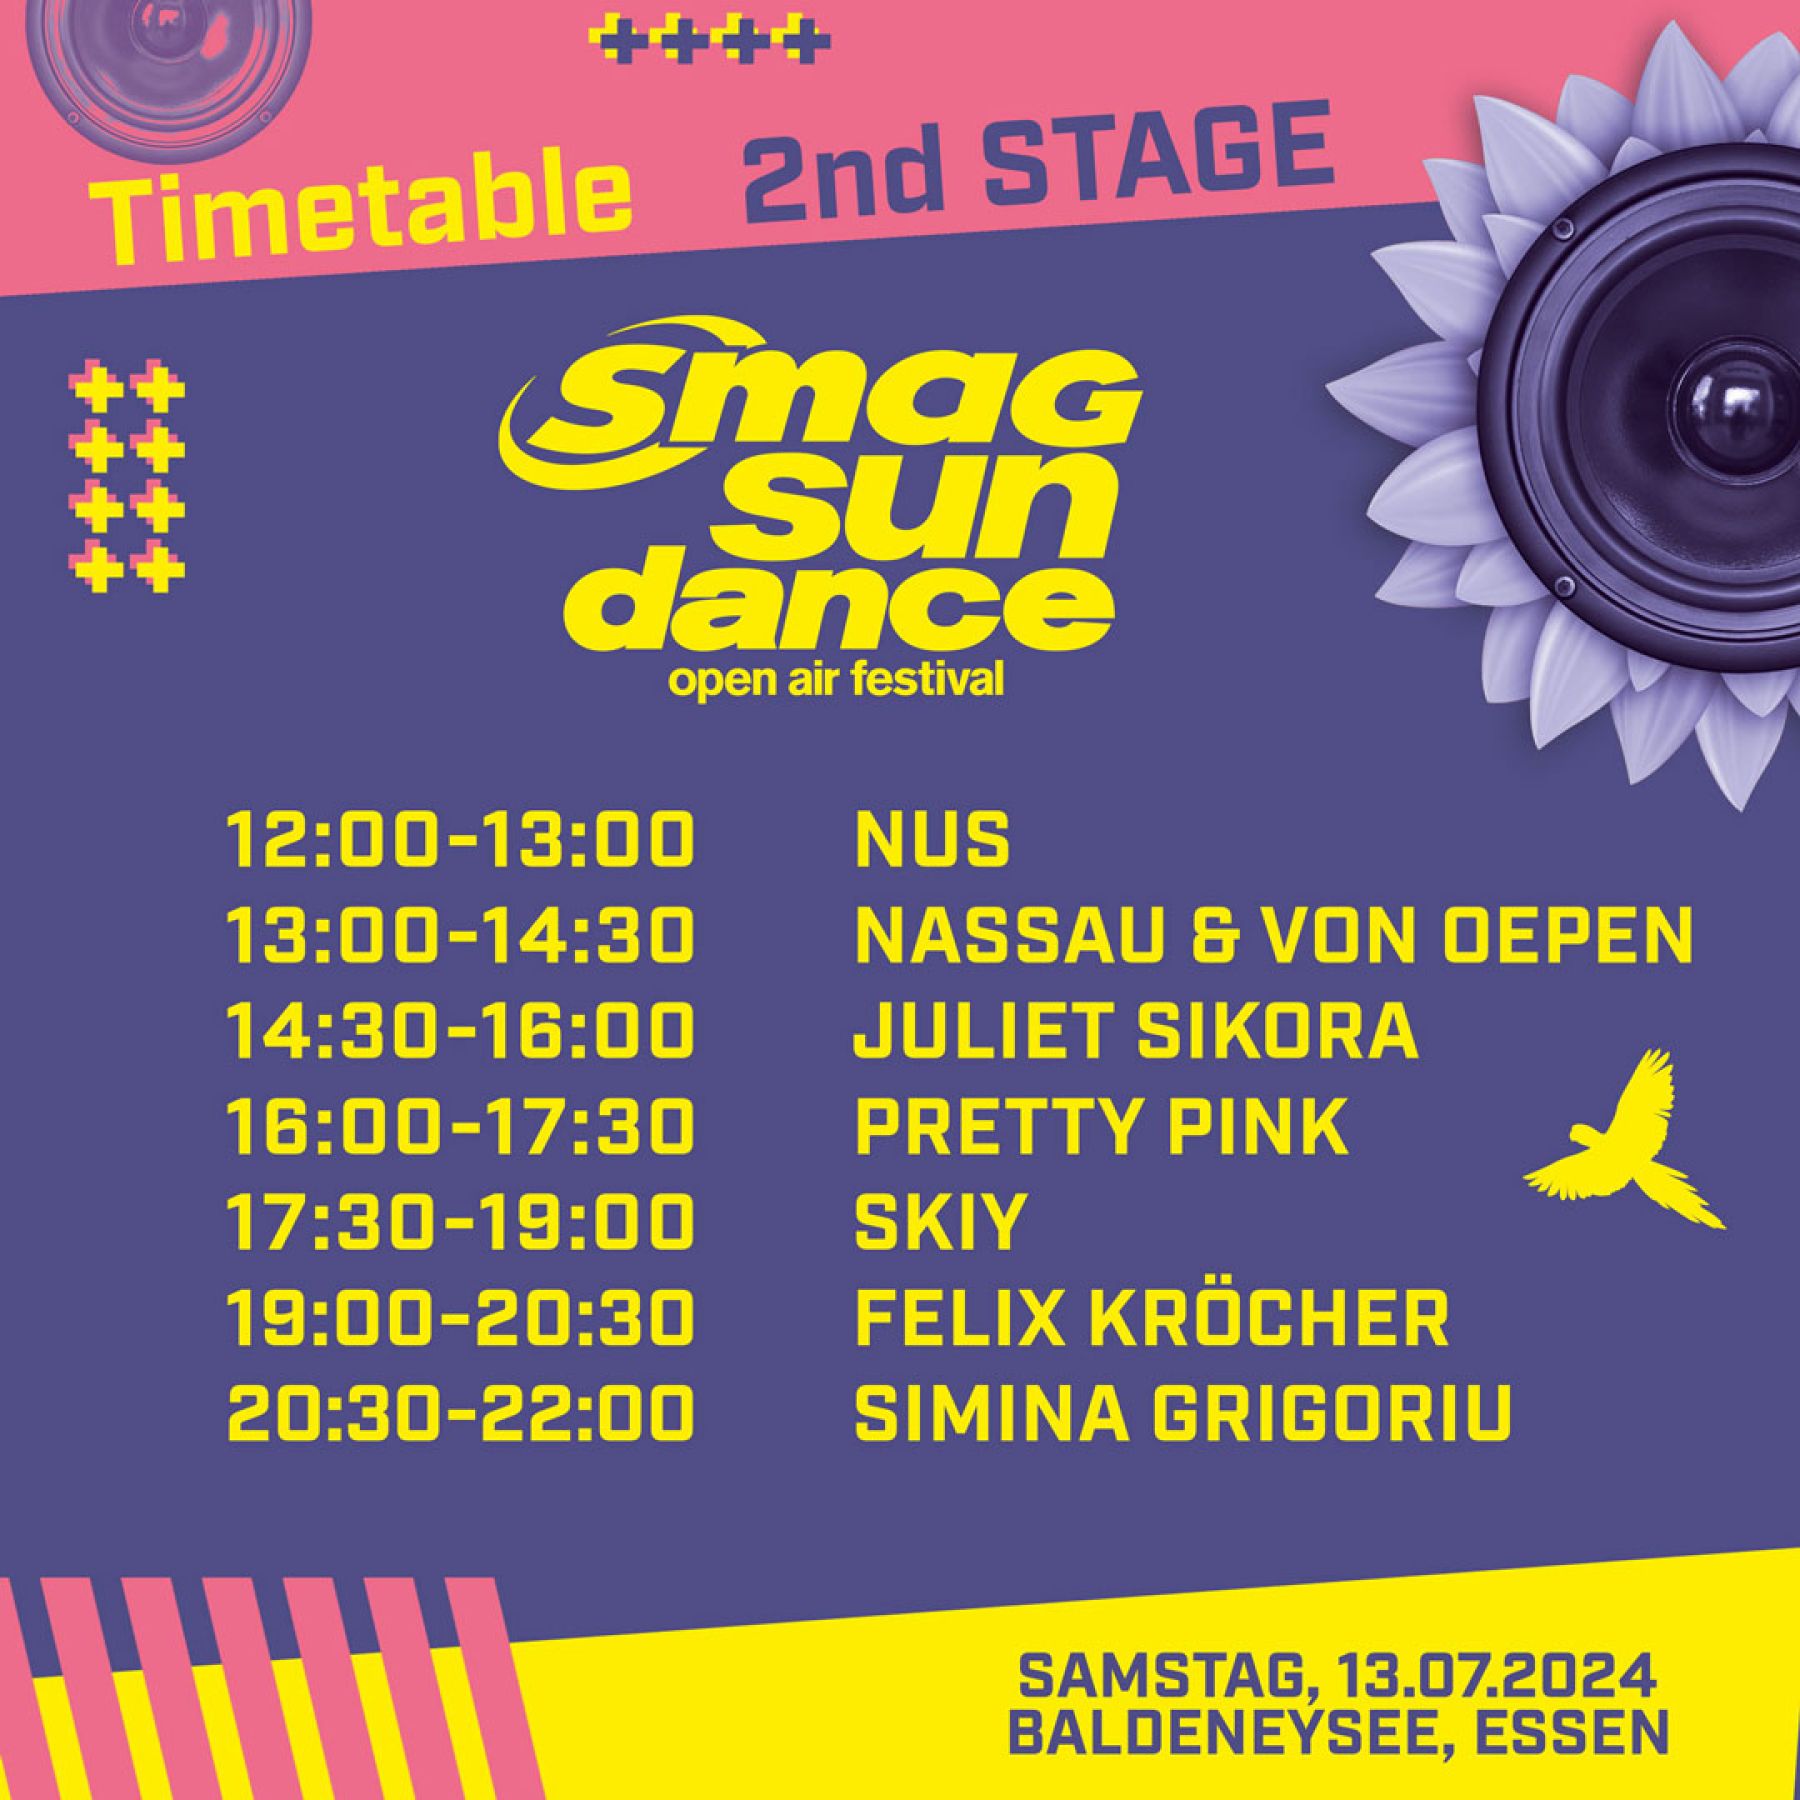 Timetable SMAG Sundance 2nd Stage 2024